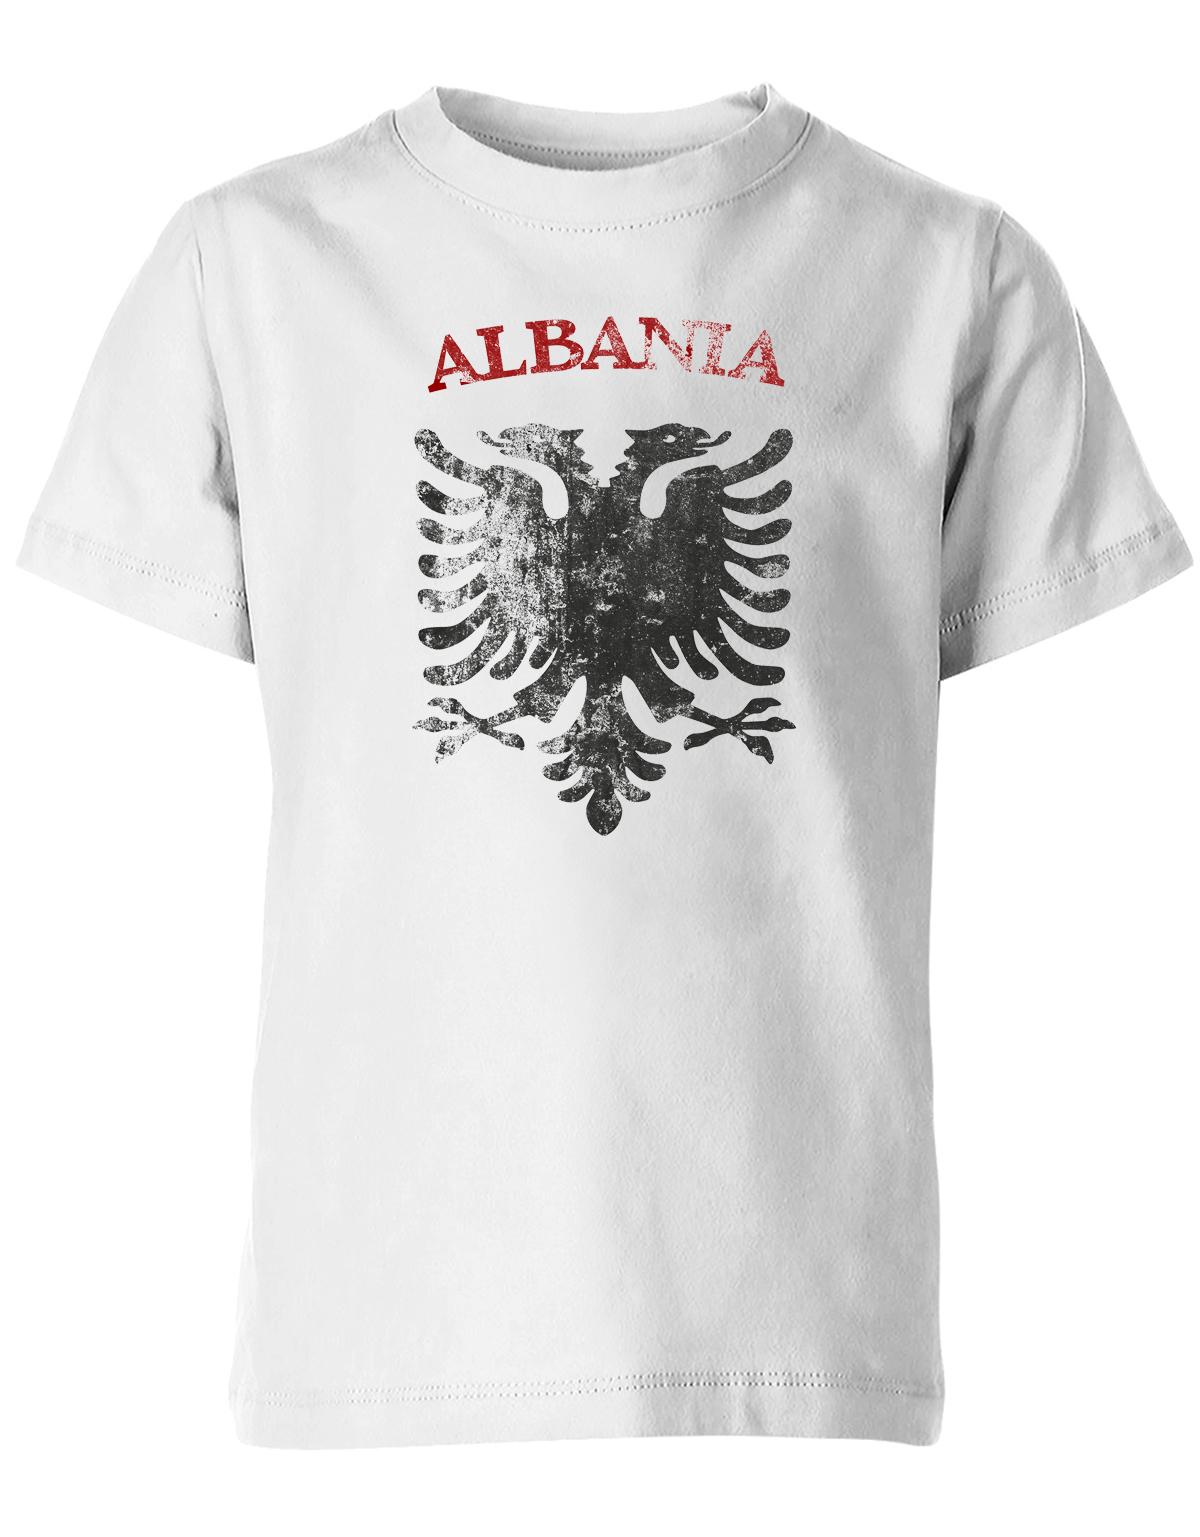 Albania-Vintage-Kinder-Shirt-Weiss